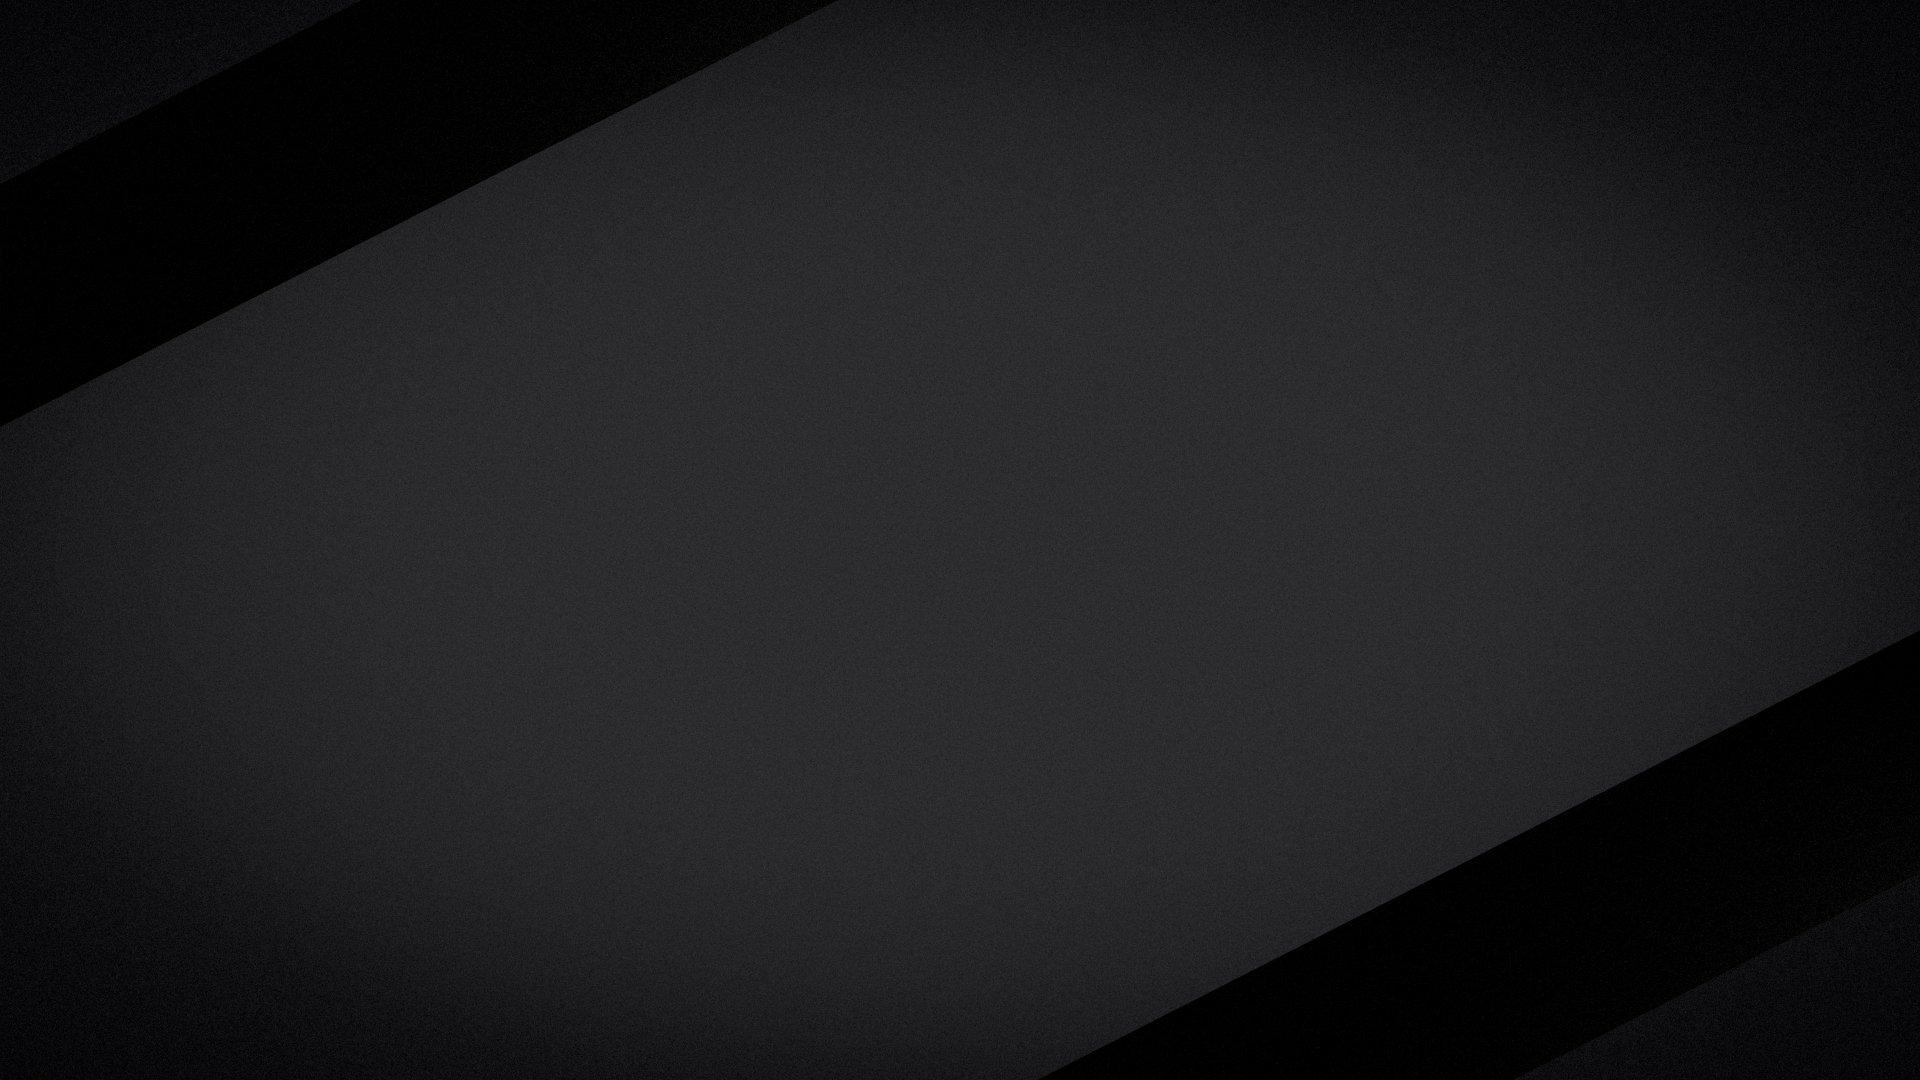  Grey  8k  Ultra HD Wallpaper  Background Image 7680x4320 